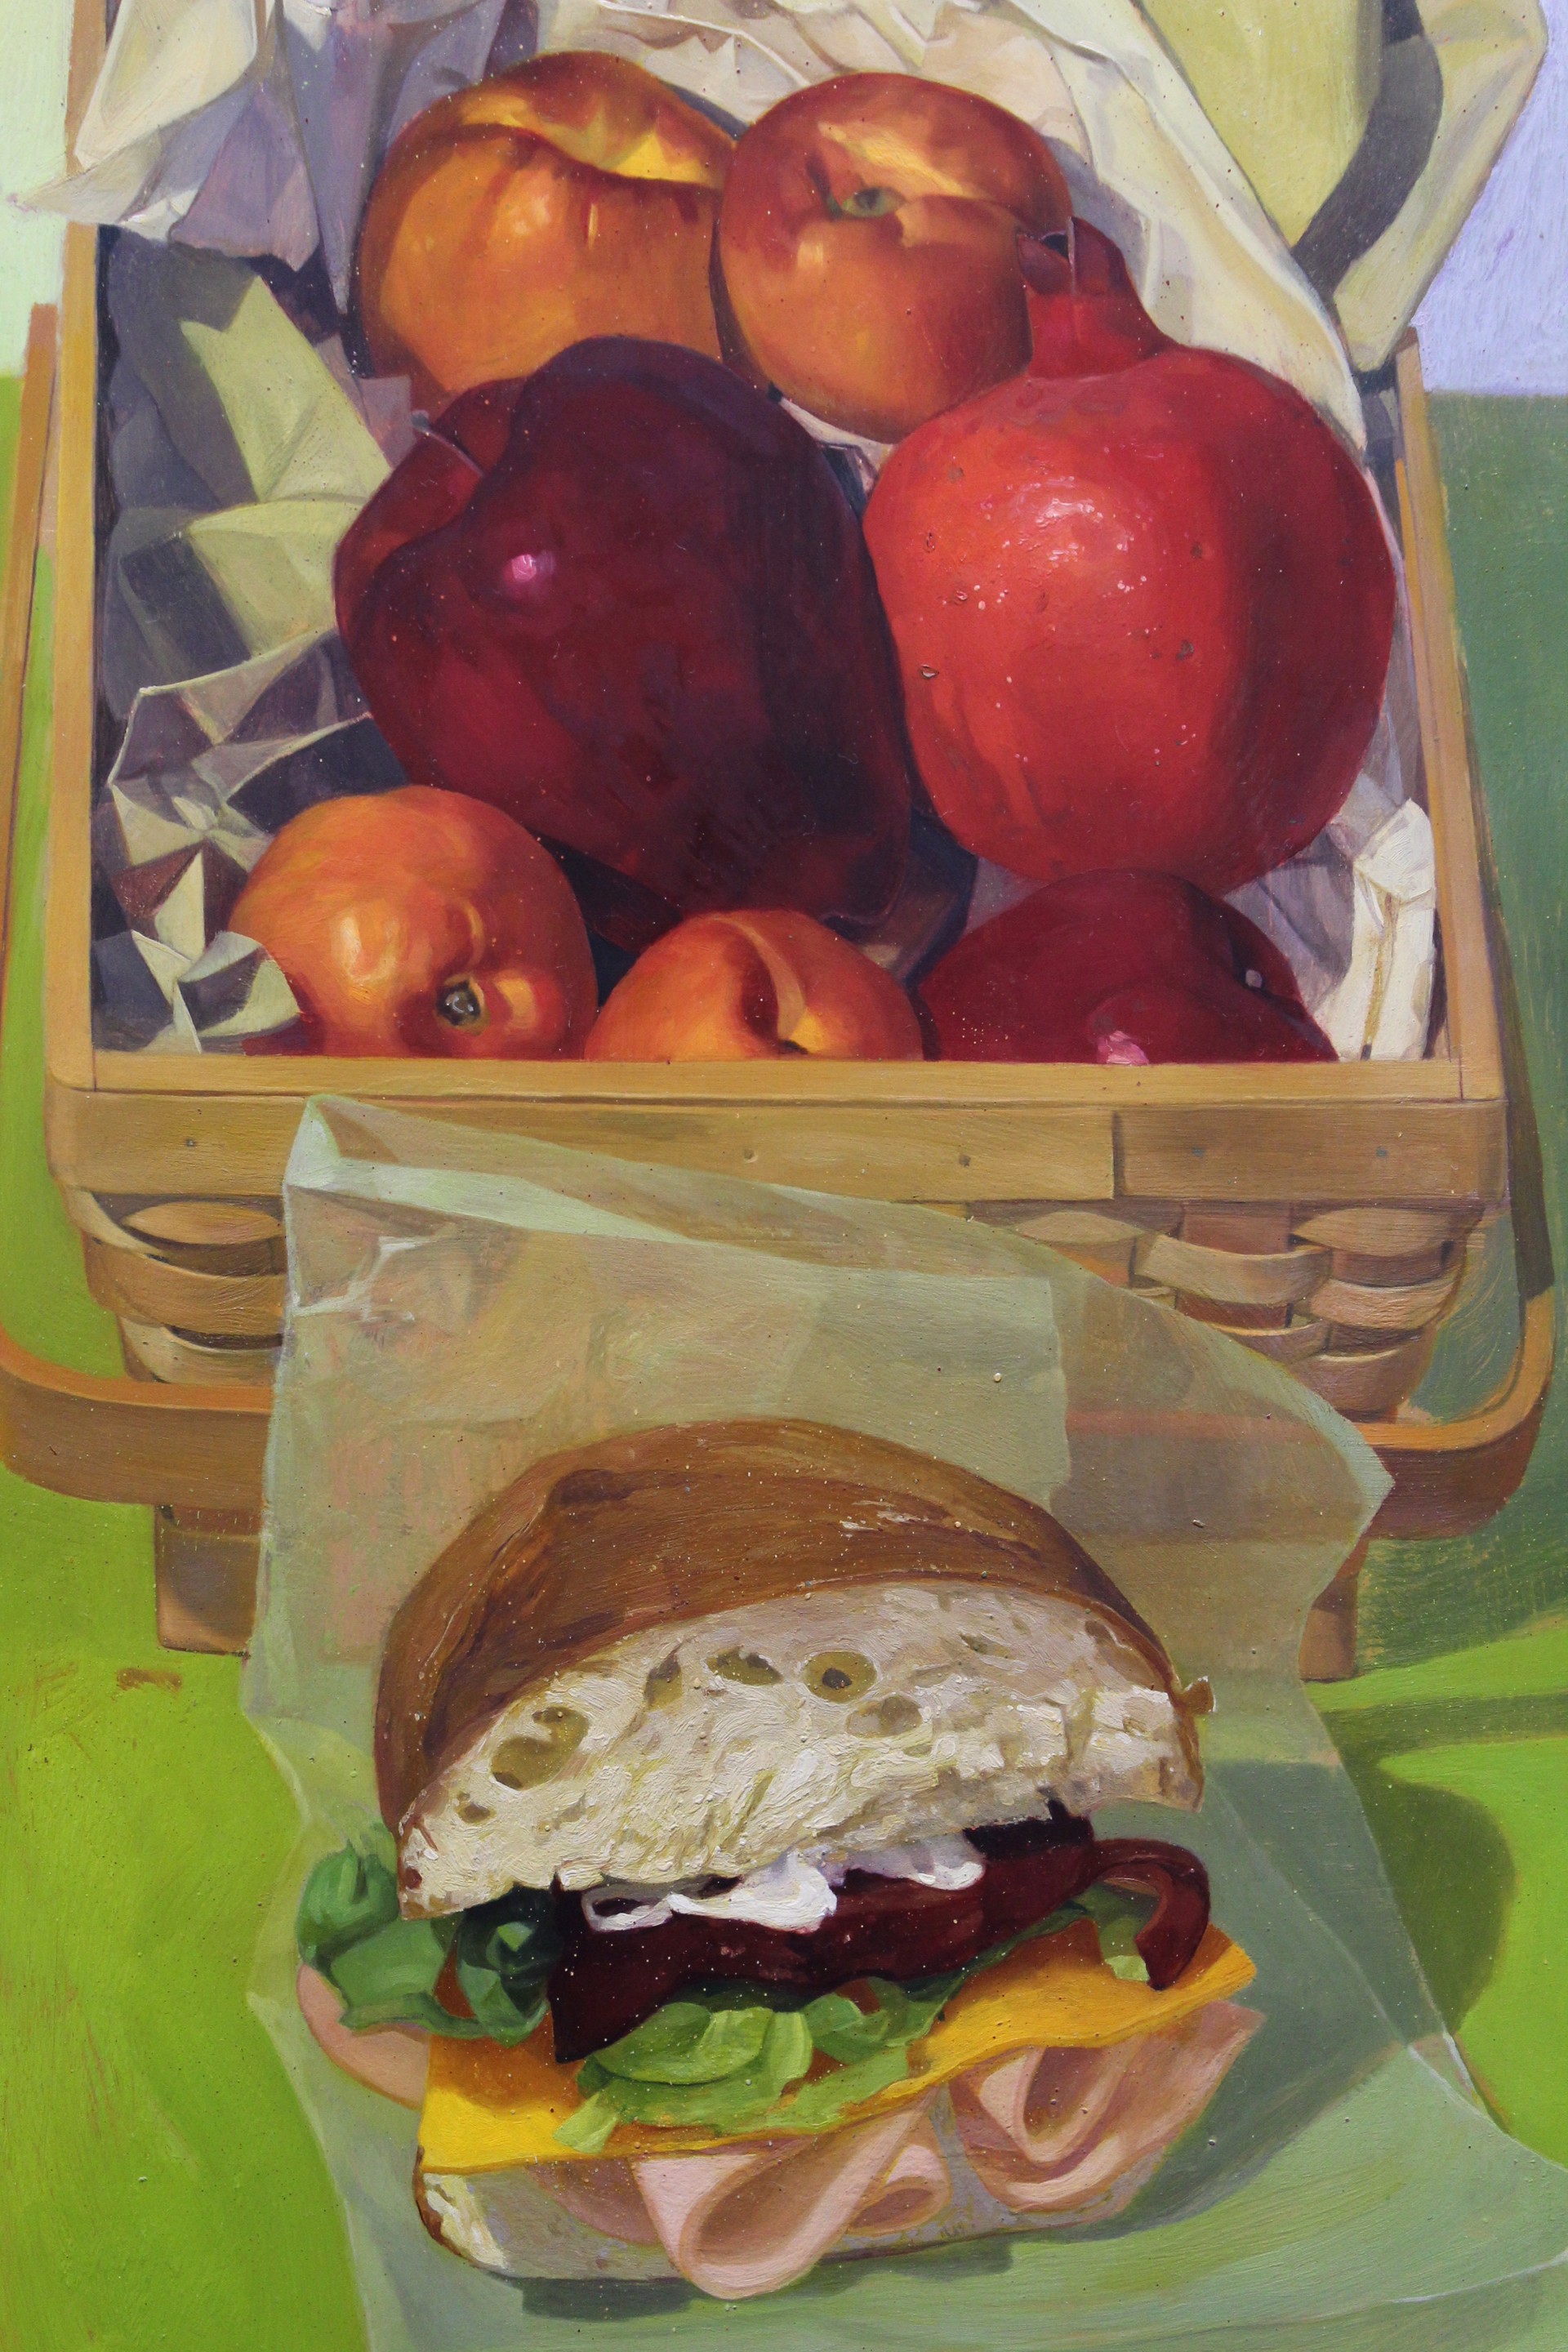 Turkey Sandwich with Apples by Benjamin J. Shamback